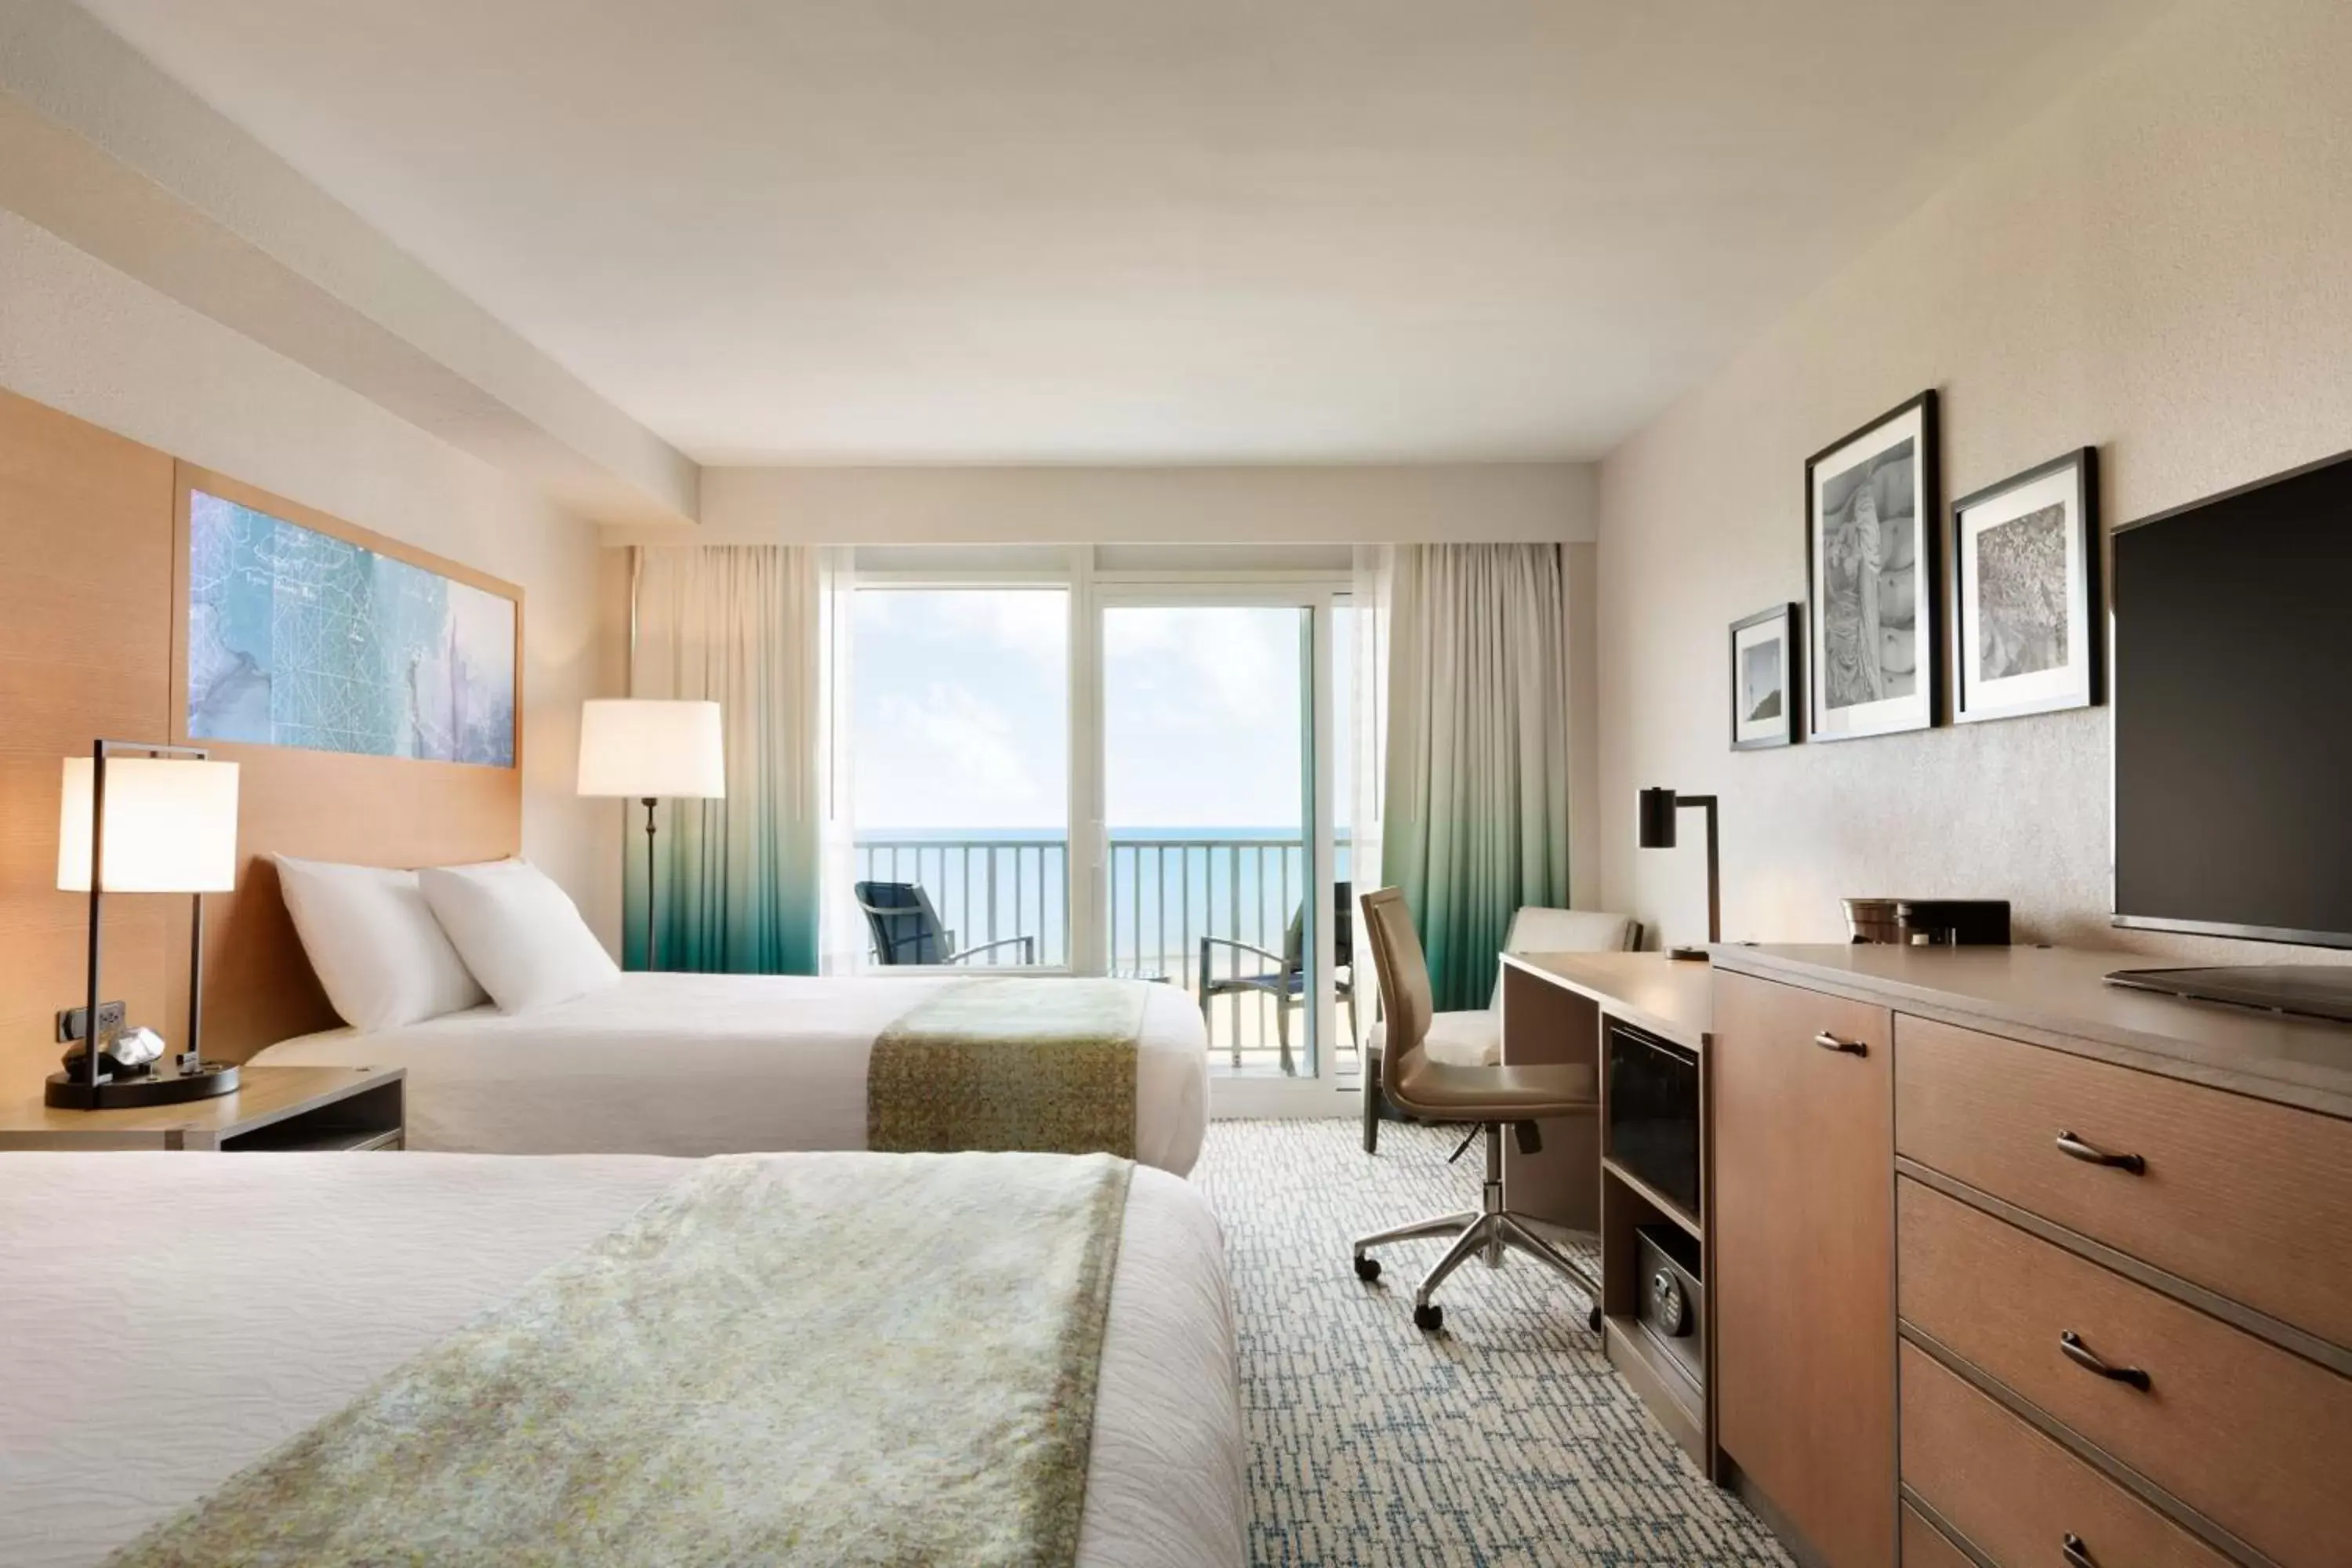 Bedroom in Surfbreak Oceanfront Hotel, Ascend Hotel Collection